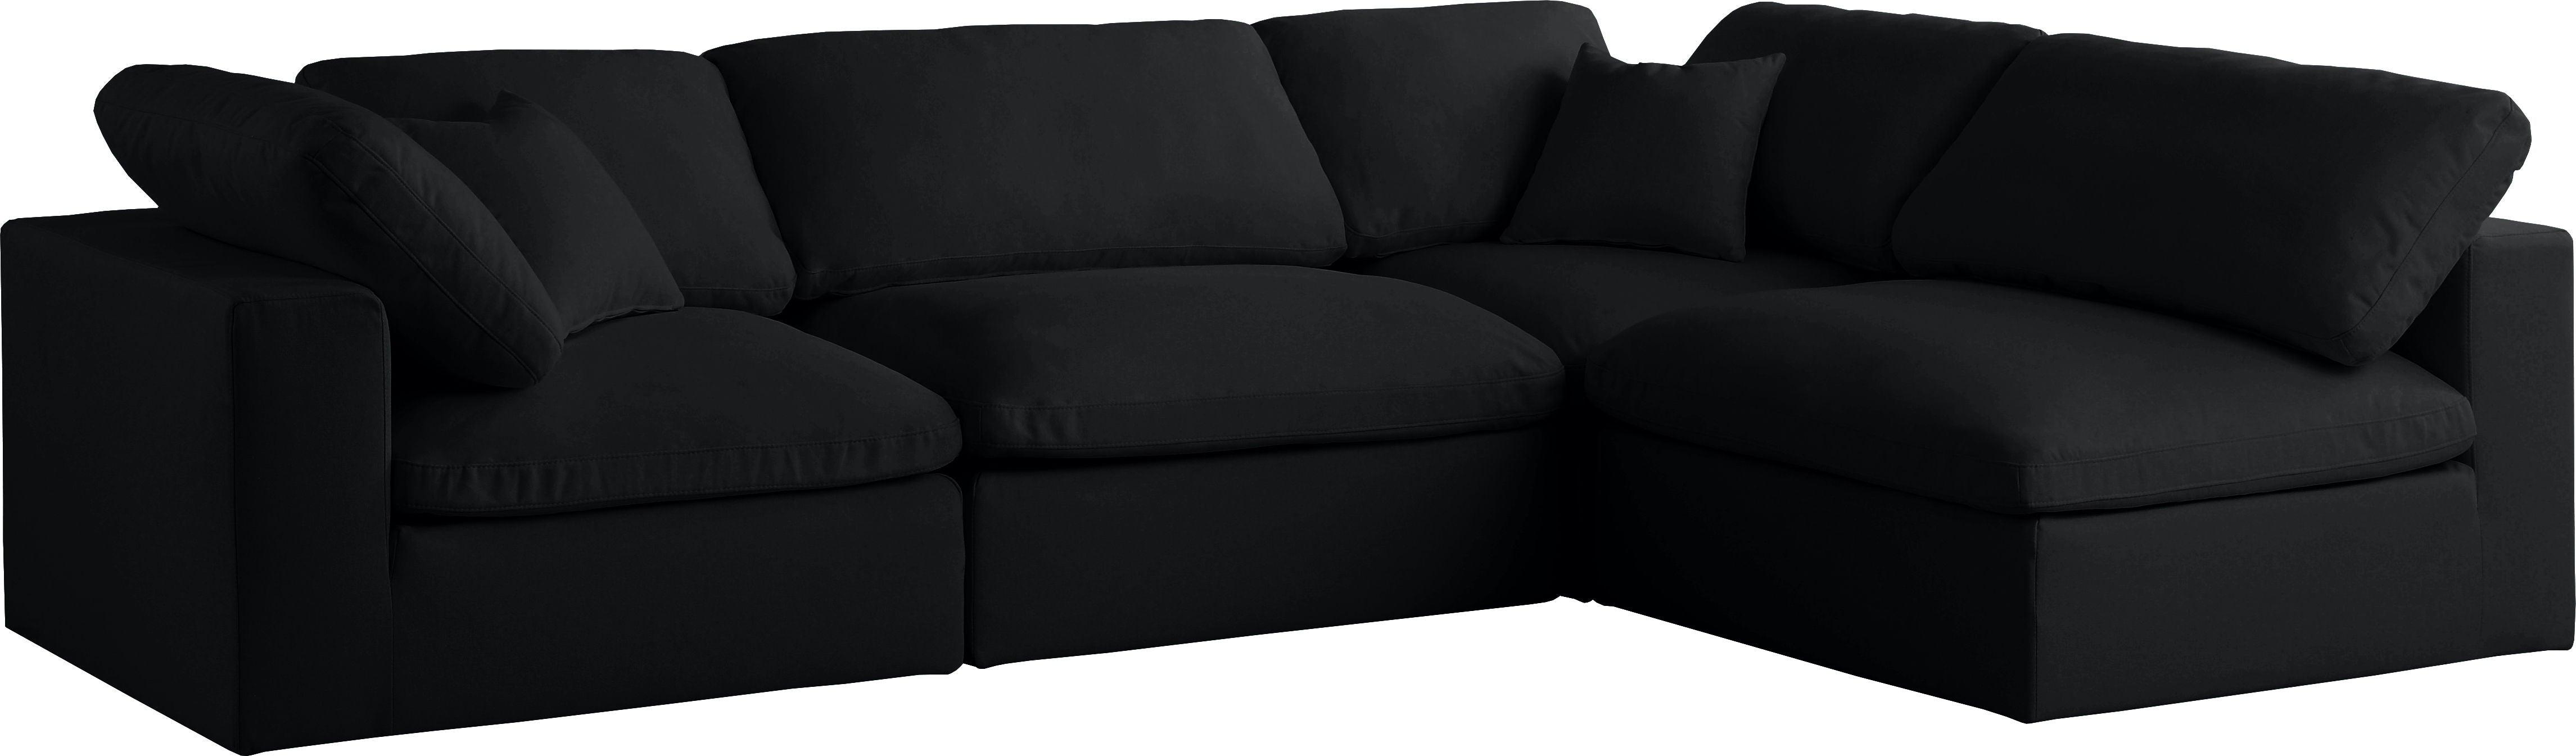 Meridian Furniture - Plush - Standard Comfort Modular Sectional - Black - 5th Avenue Furniture